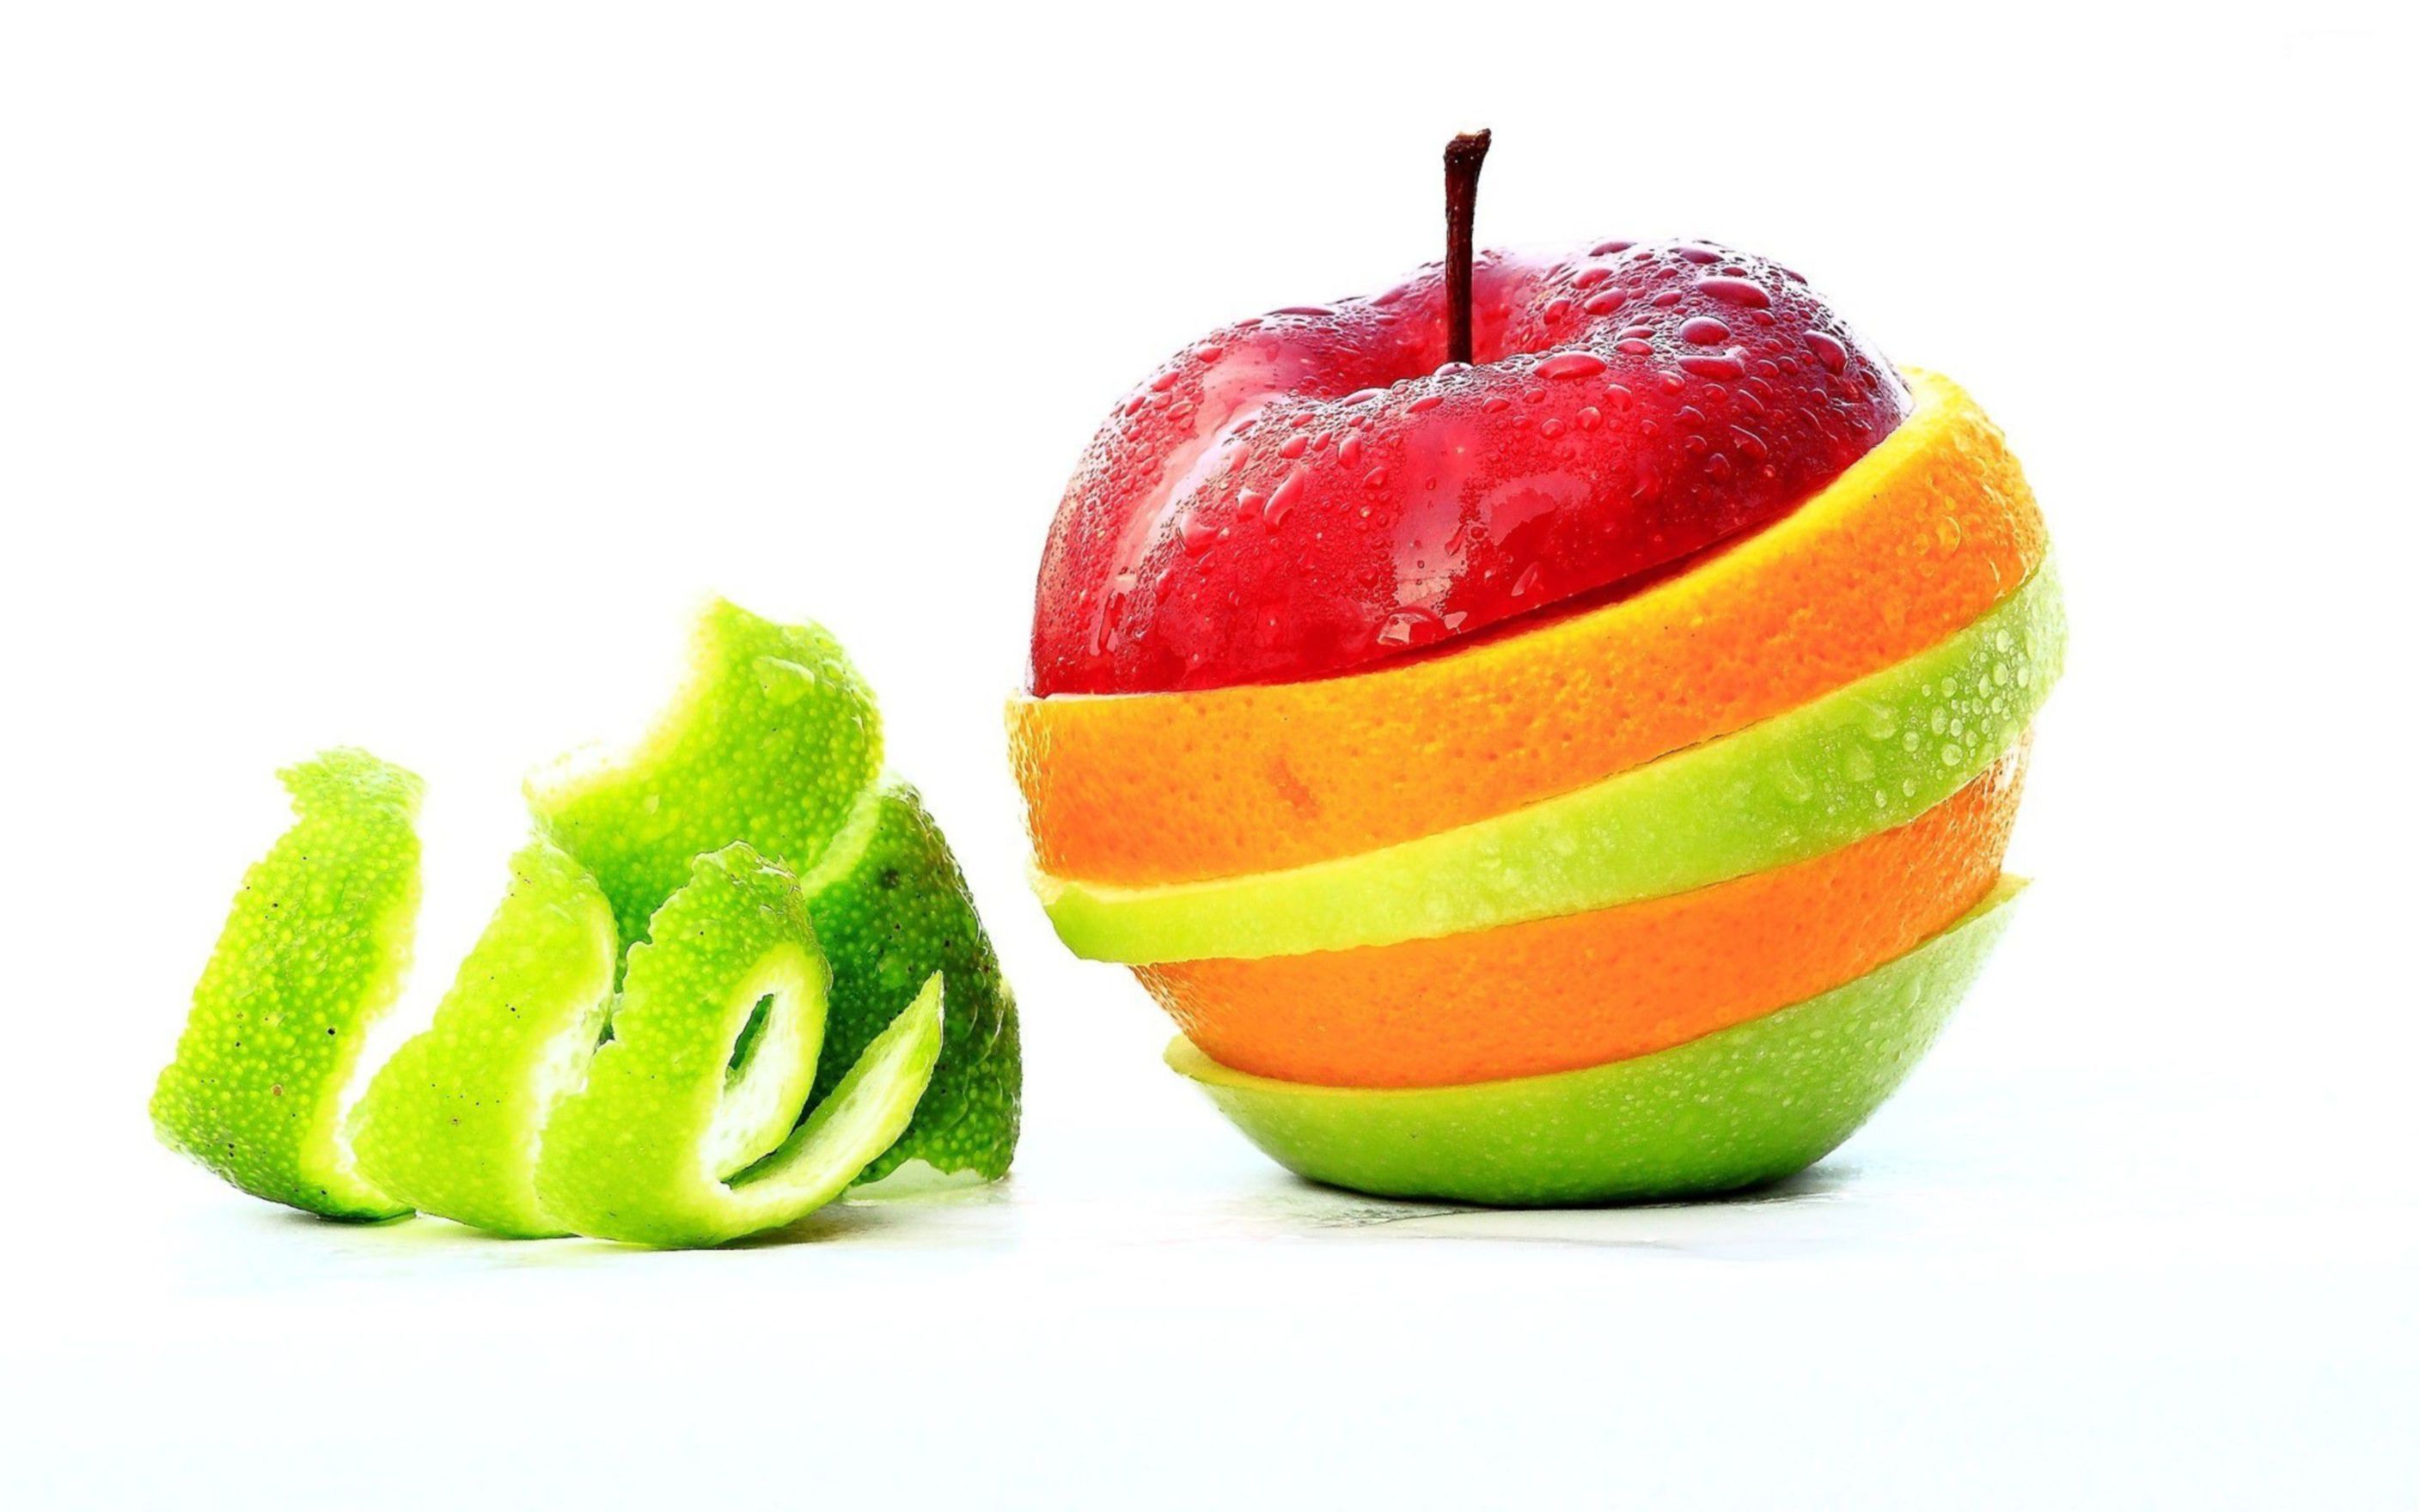 Funny Fruit Apple Background Wallpaper: Desktop HD Wallpaper Free Image, Picture, Photo on DailyHDWallpaper.com